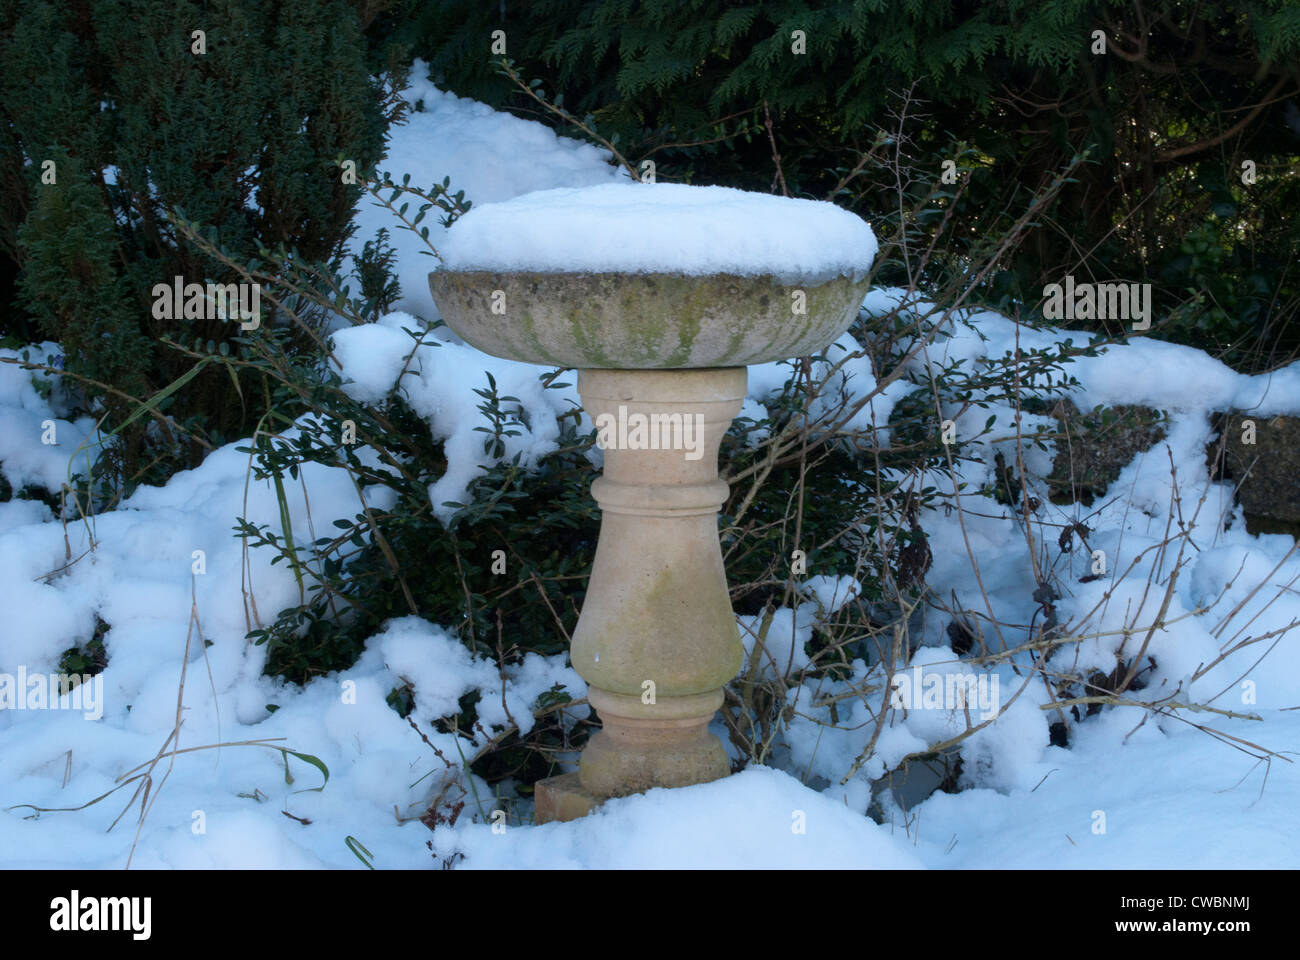 Snow covered stone bird bath in garden Stock Photo